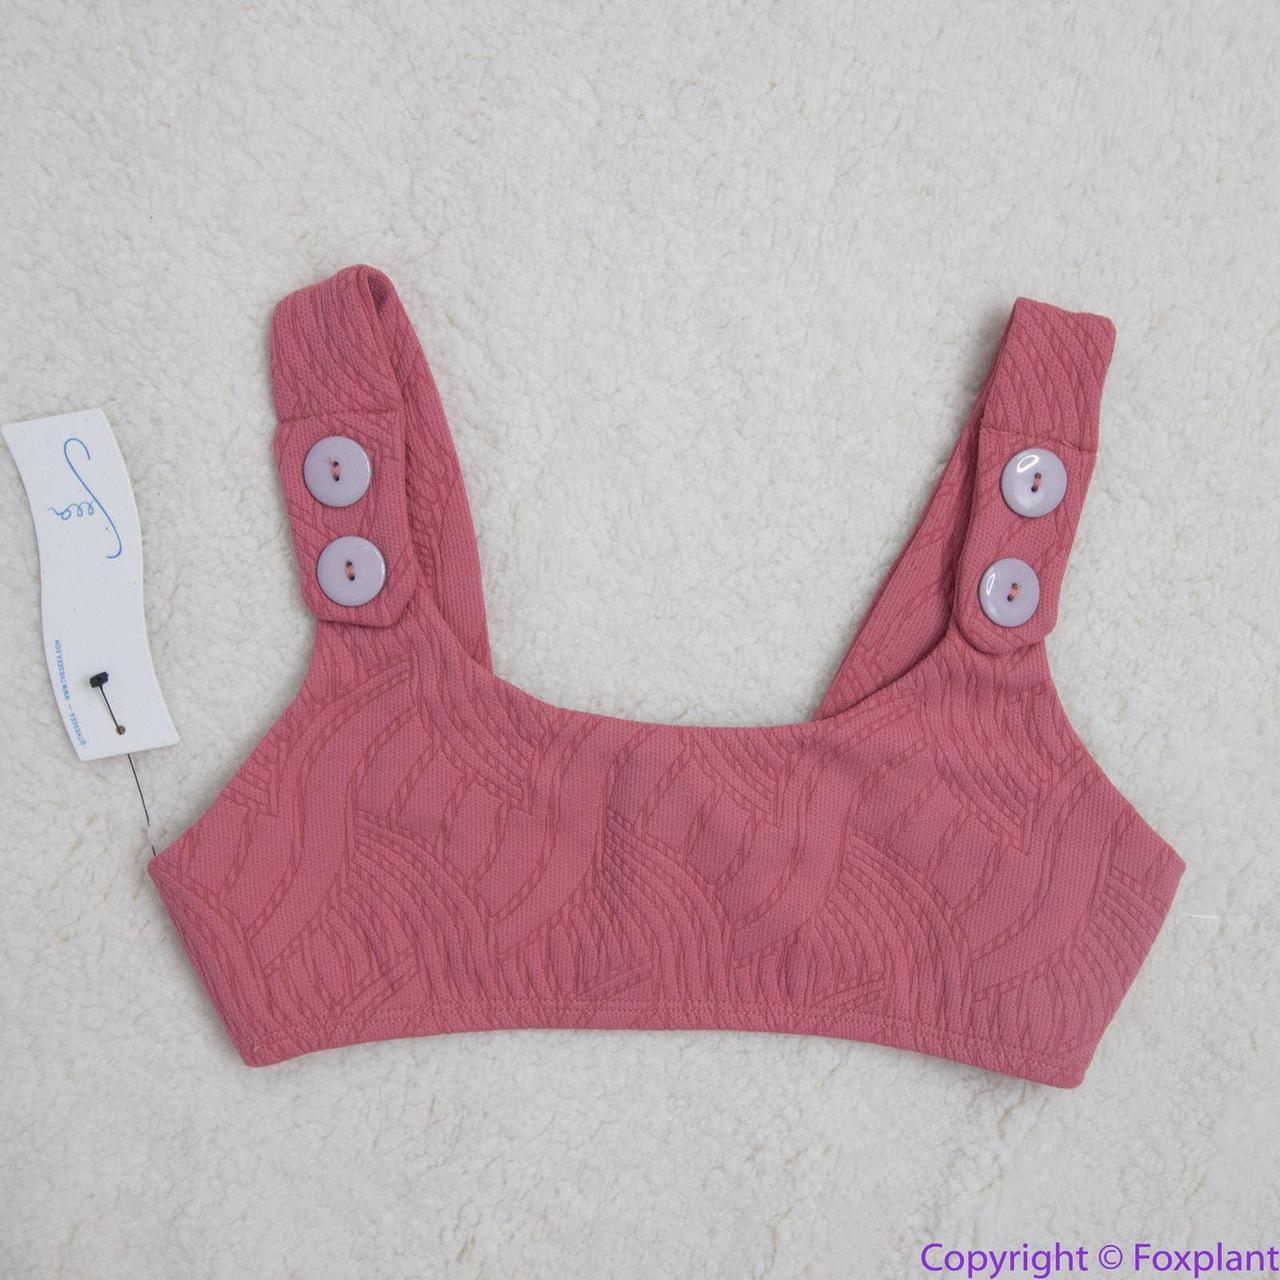 Royalty-Free photo: Women's pink bra lot